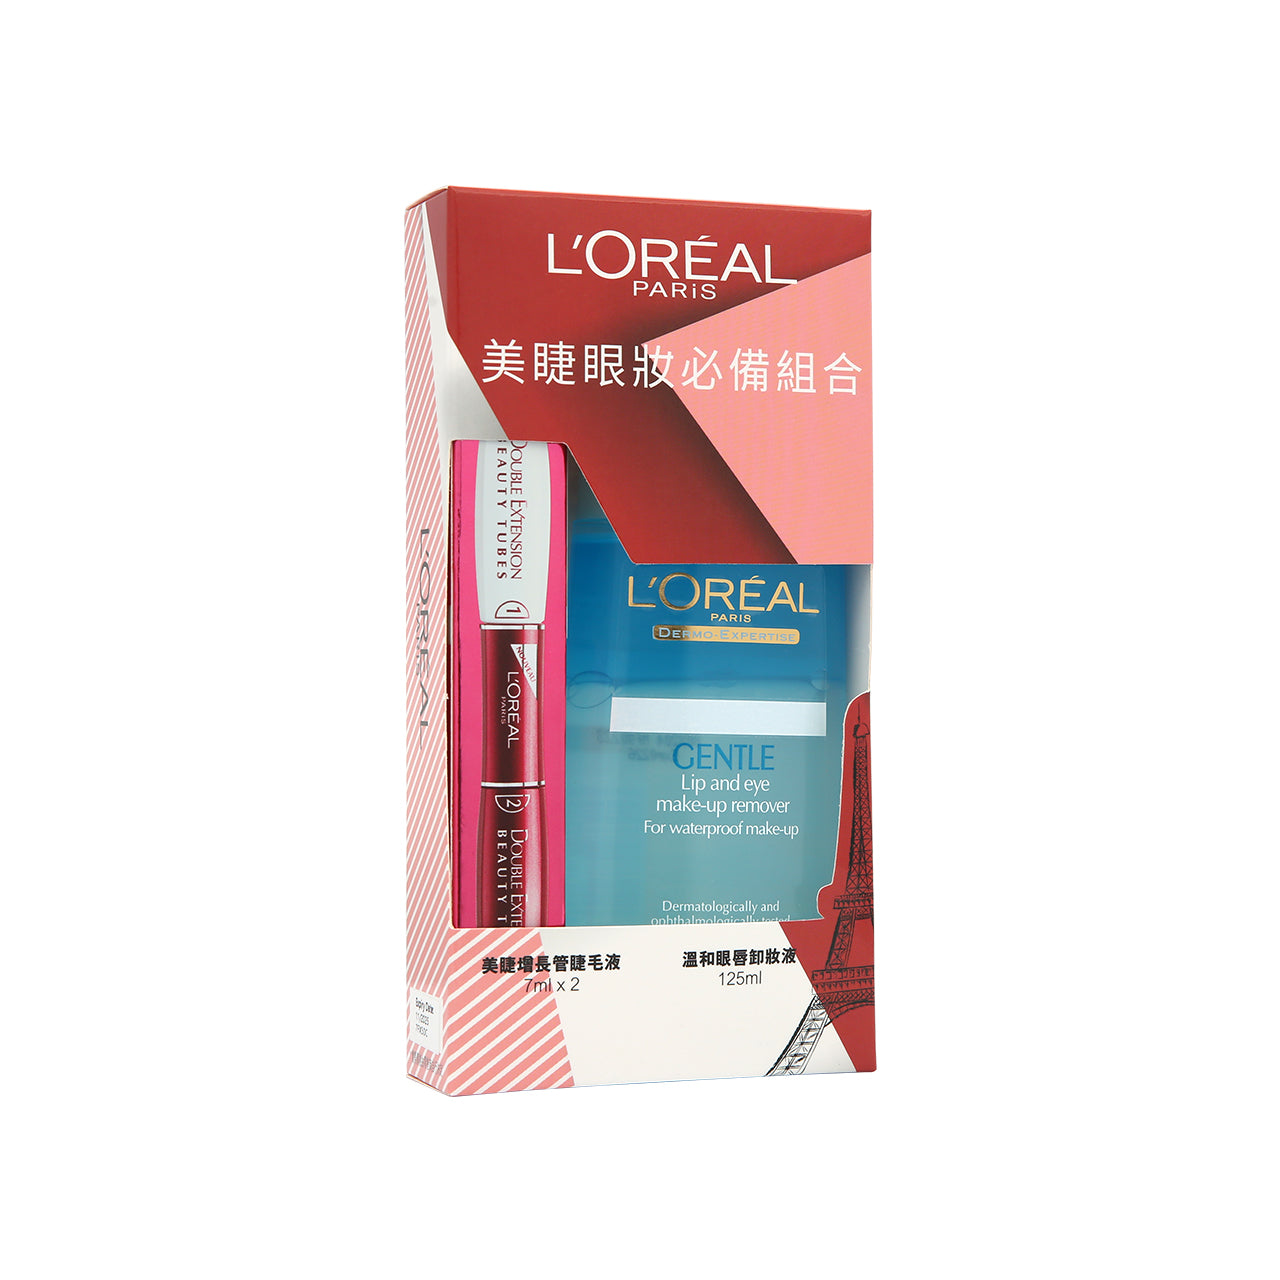 L'Oreal Beauty tube + Remover Packset 2pcs | Sasa Global eShop